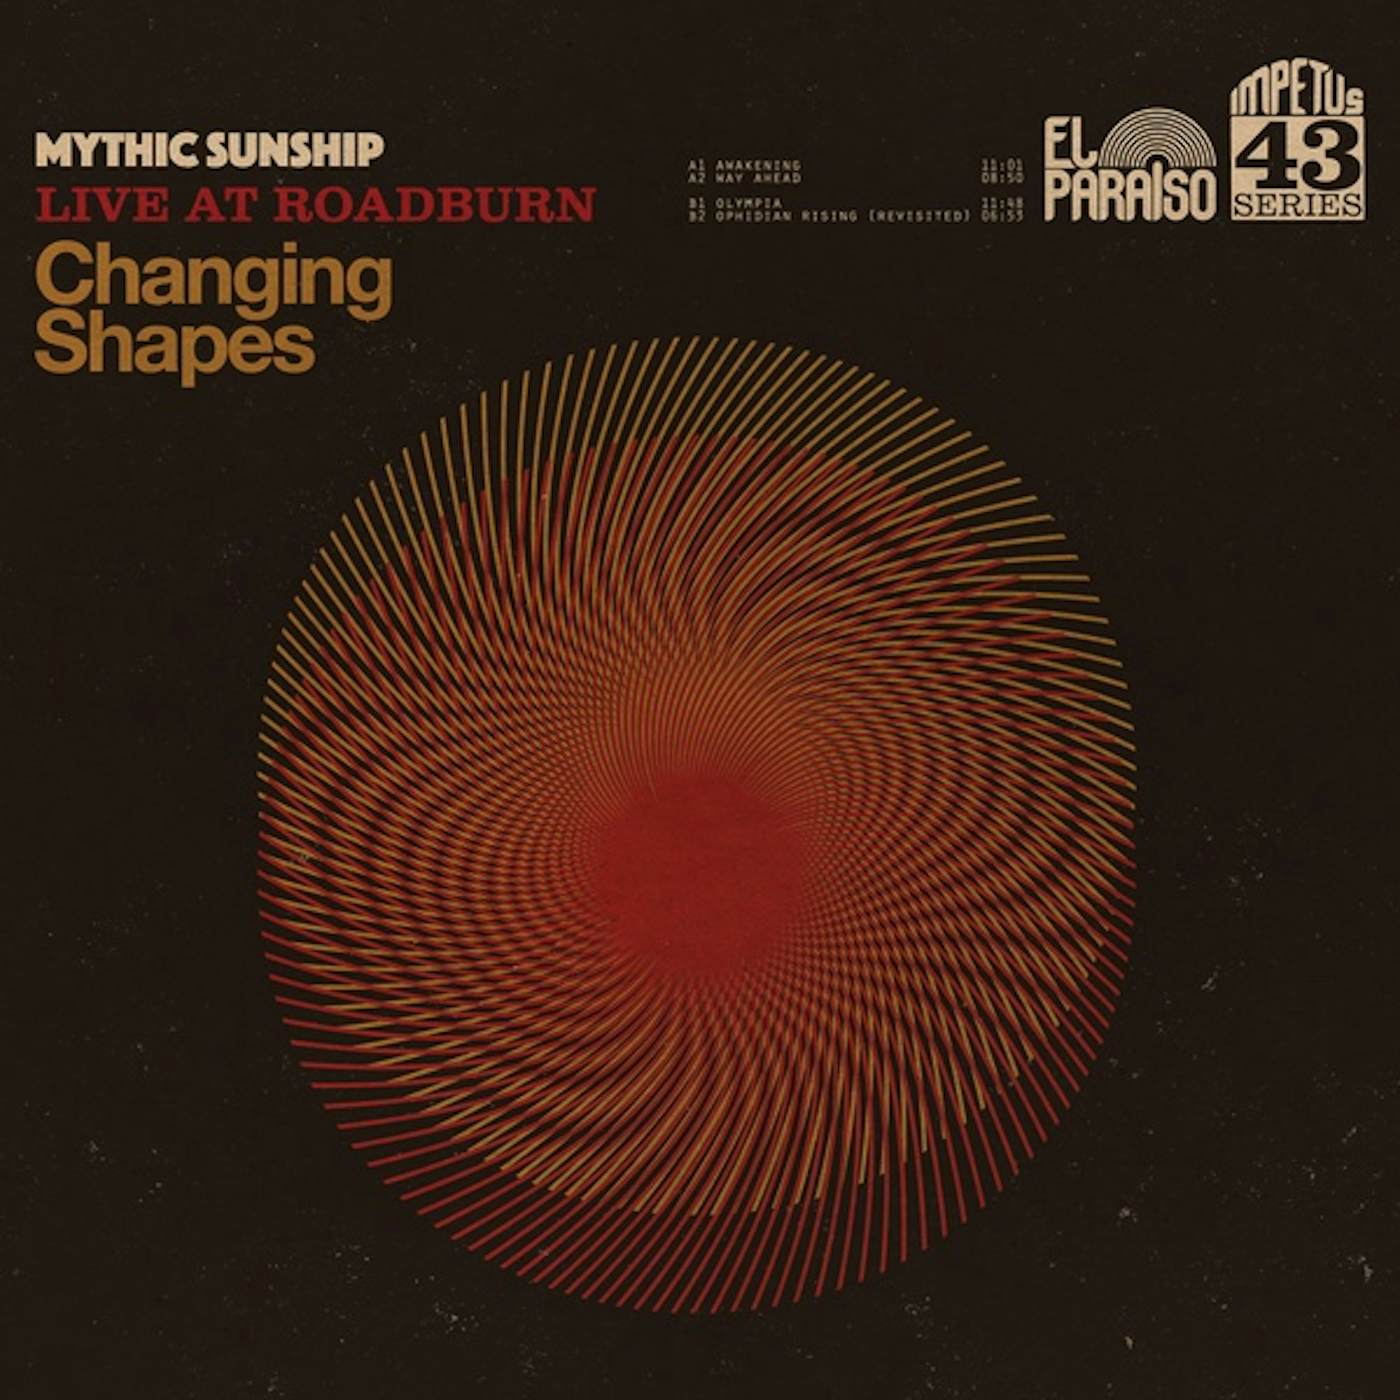 Mythic Sunship Changing shapes Vinyl Record